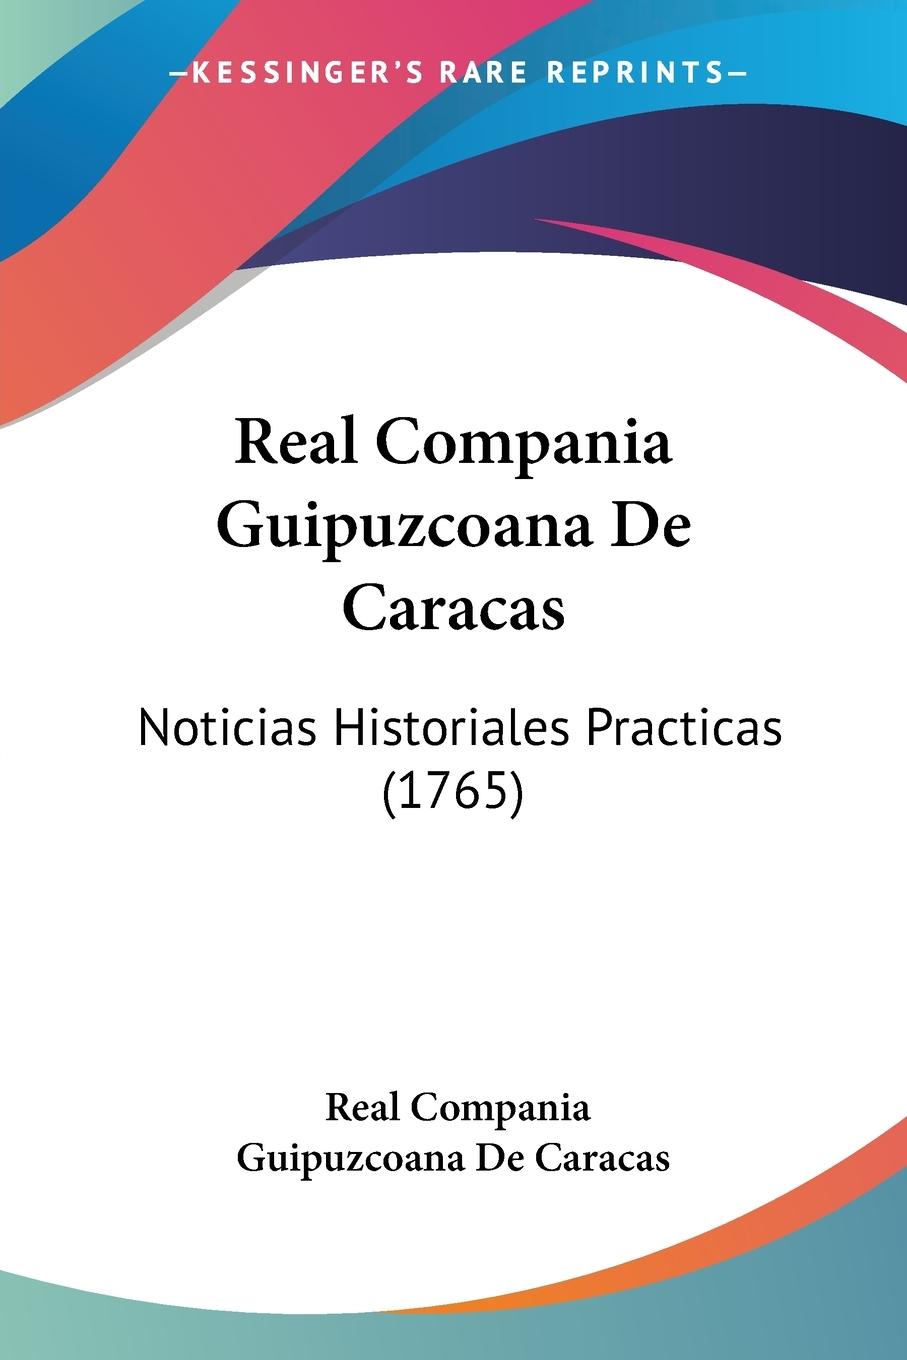 Real Compania Guipuzcoana De Caracas - Caracas, Real Compania Guipuzcoana De